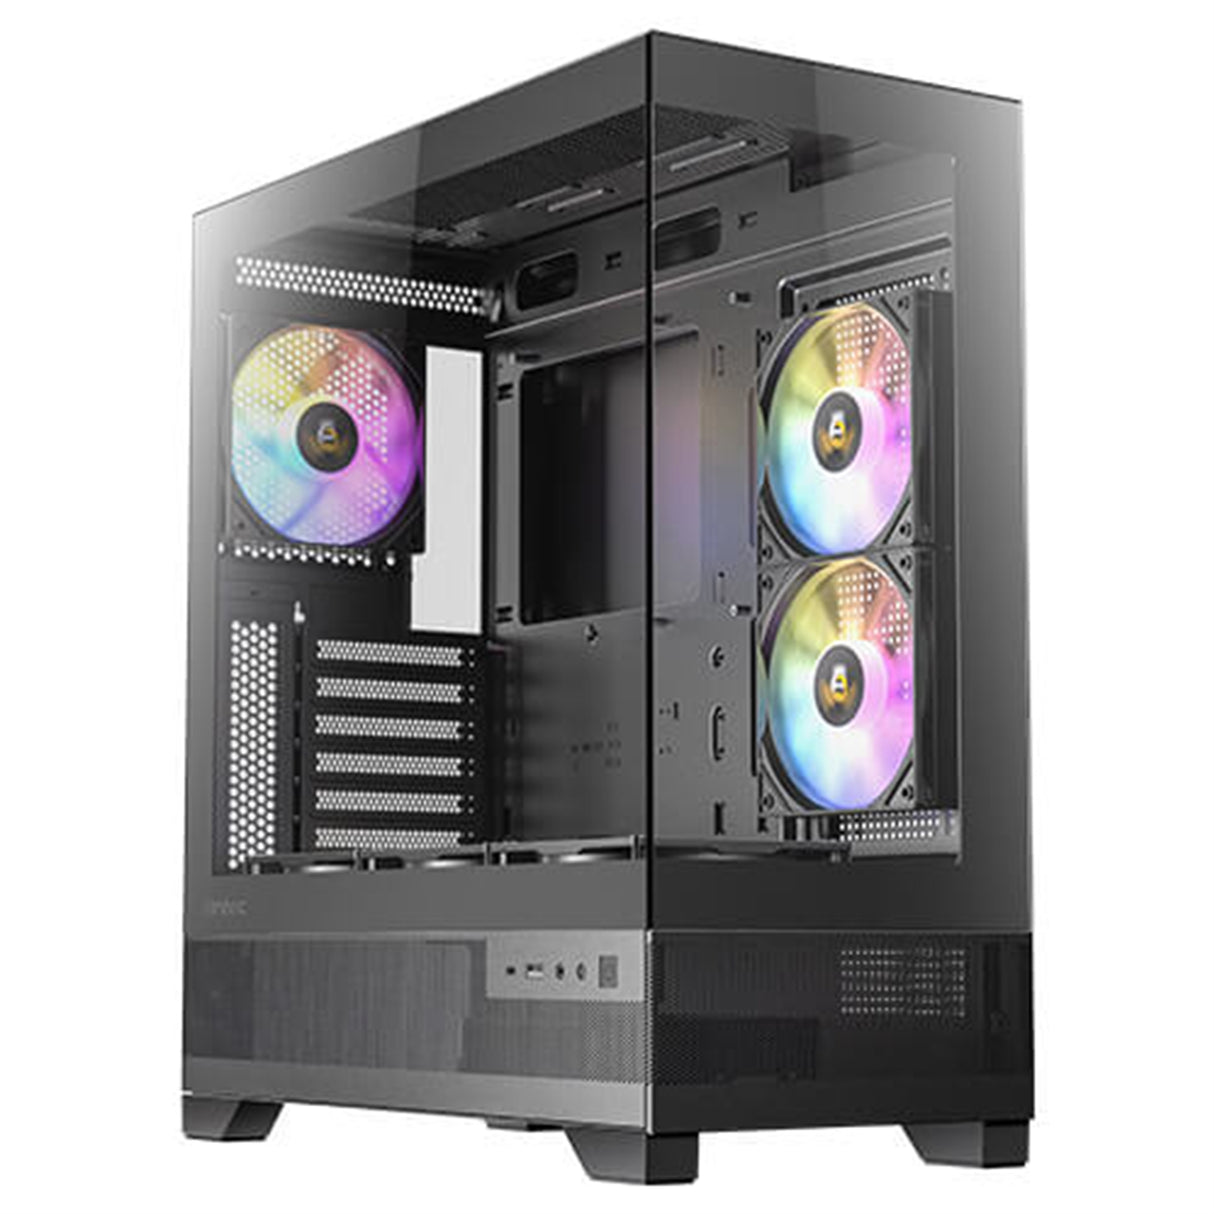 ANTEC CX700 Mid Tower Gaming Case, Black, 270 Full-view tempered glass, 6x 120mm RGB fans, 1x USB 3.0 / 1x USB Type-C, ATX, Micro ATX, ITX